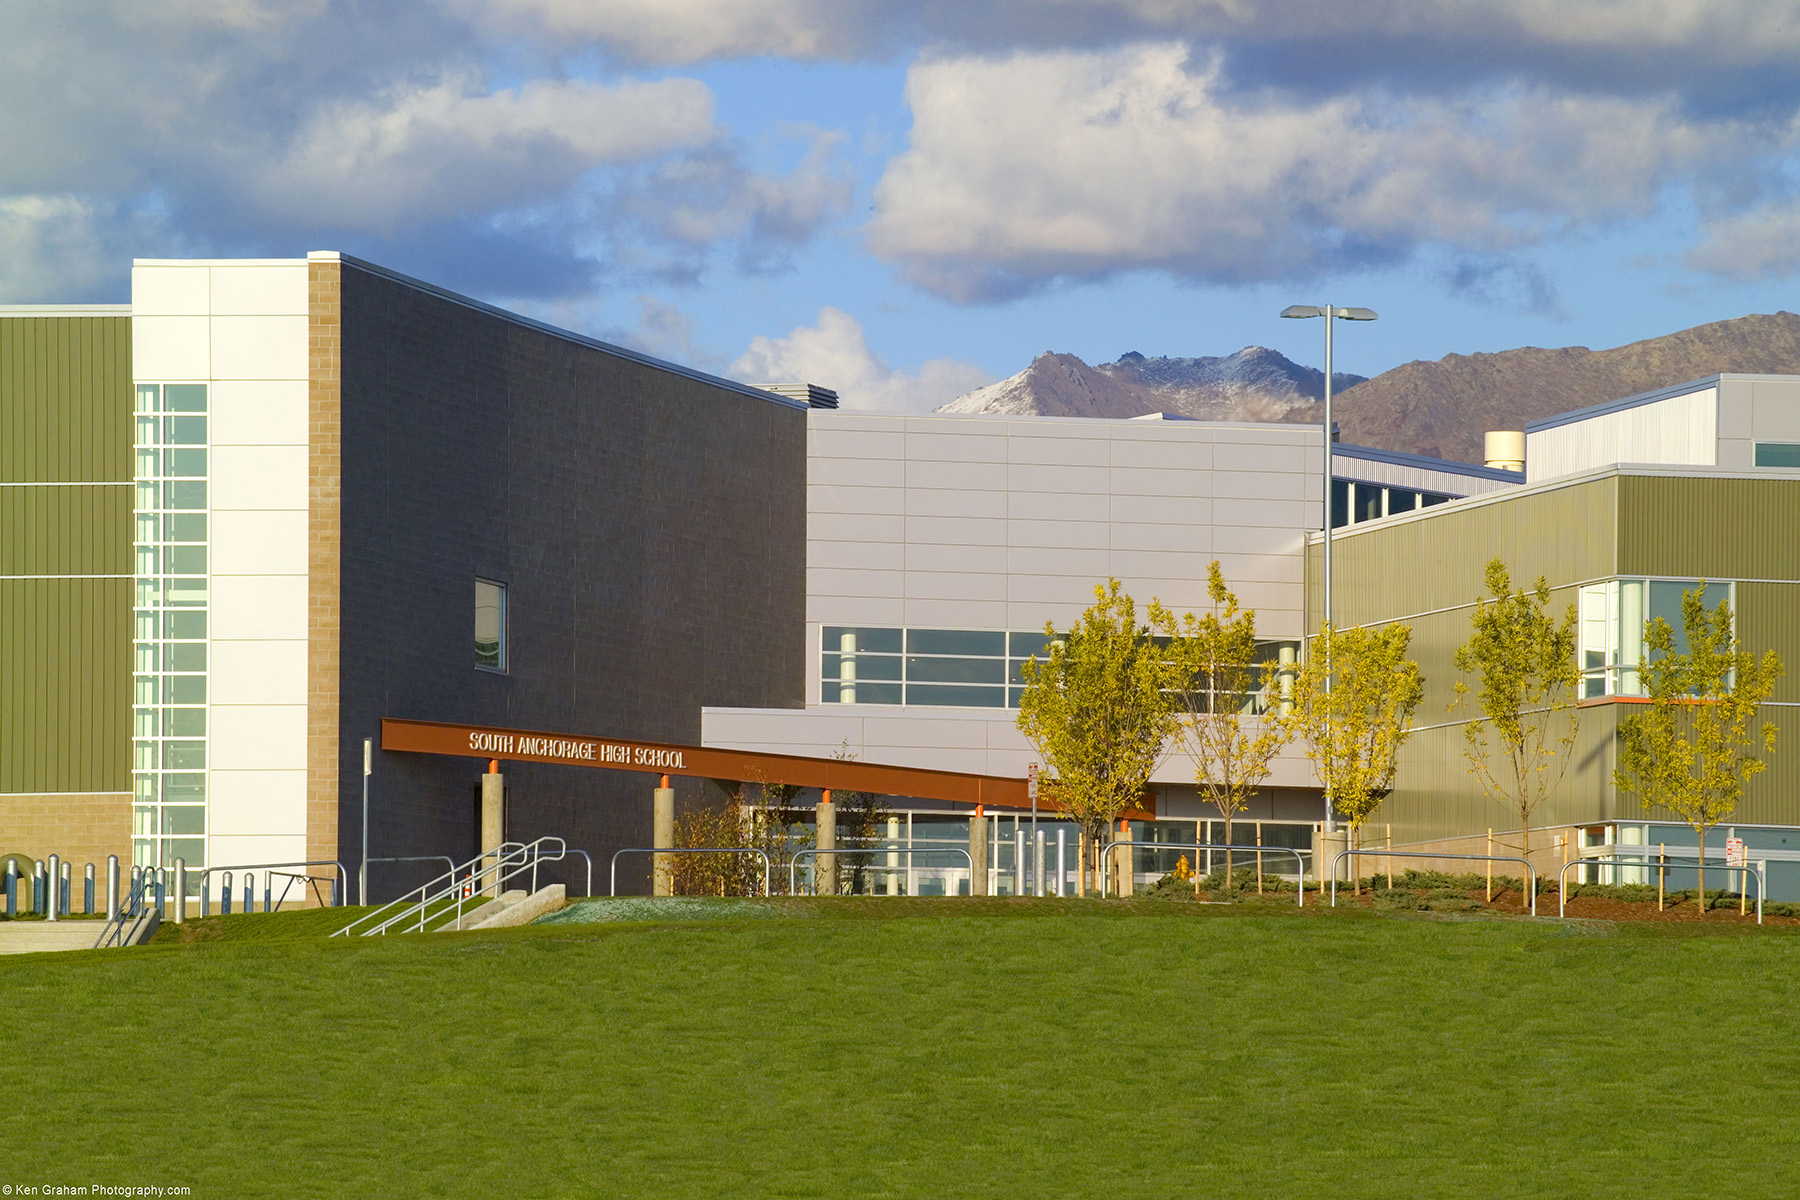 South Anchorage High School Neeser Construction Inc